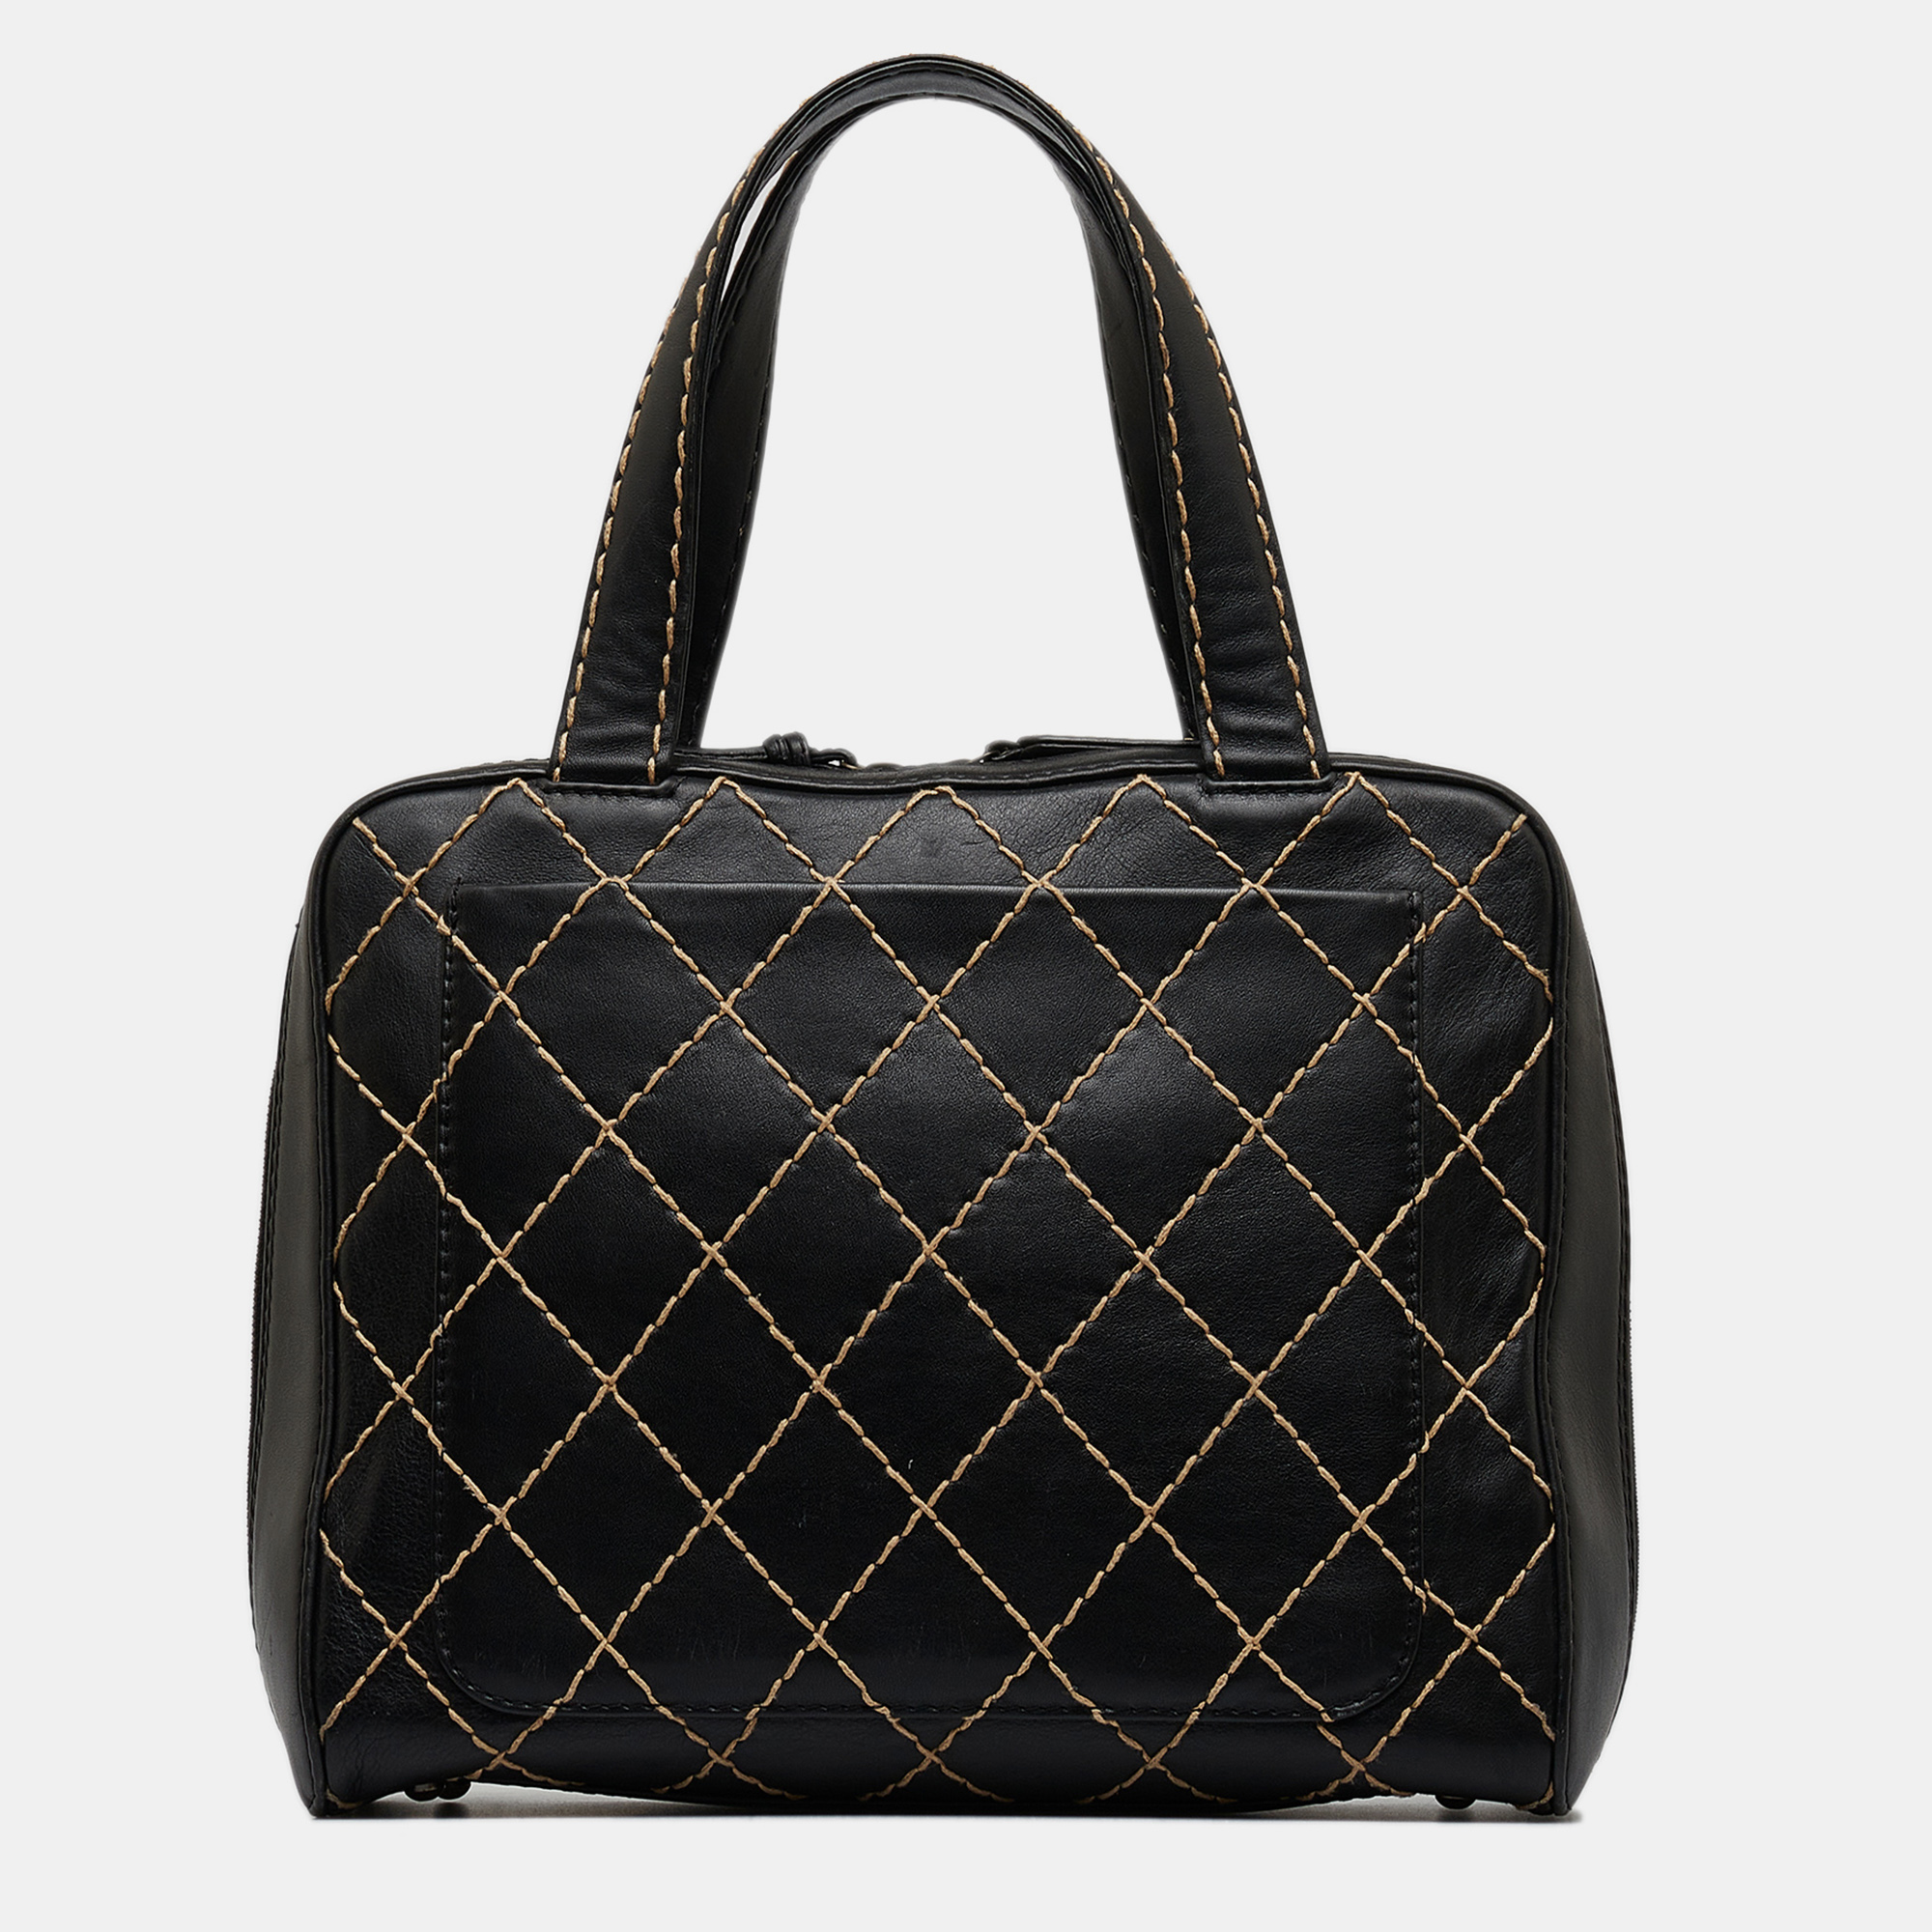 Chanel Cc Wild Stitch Handbag